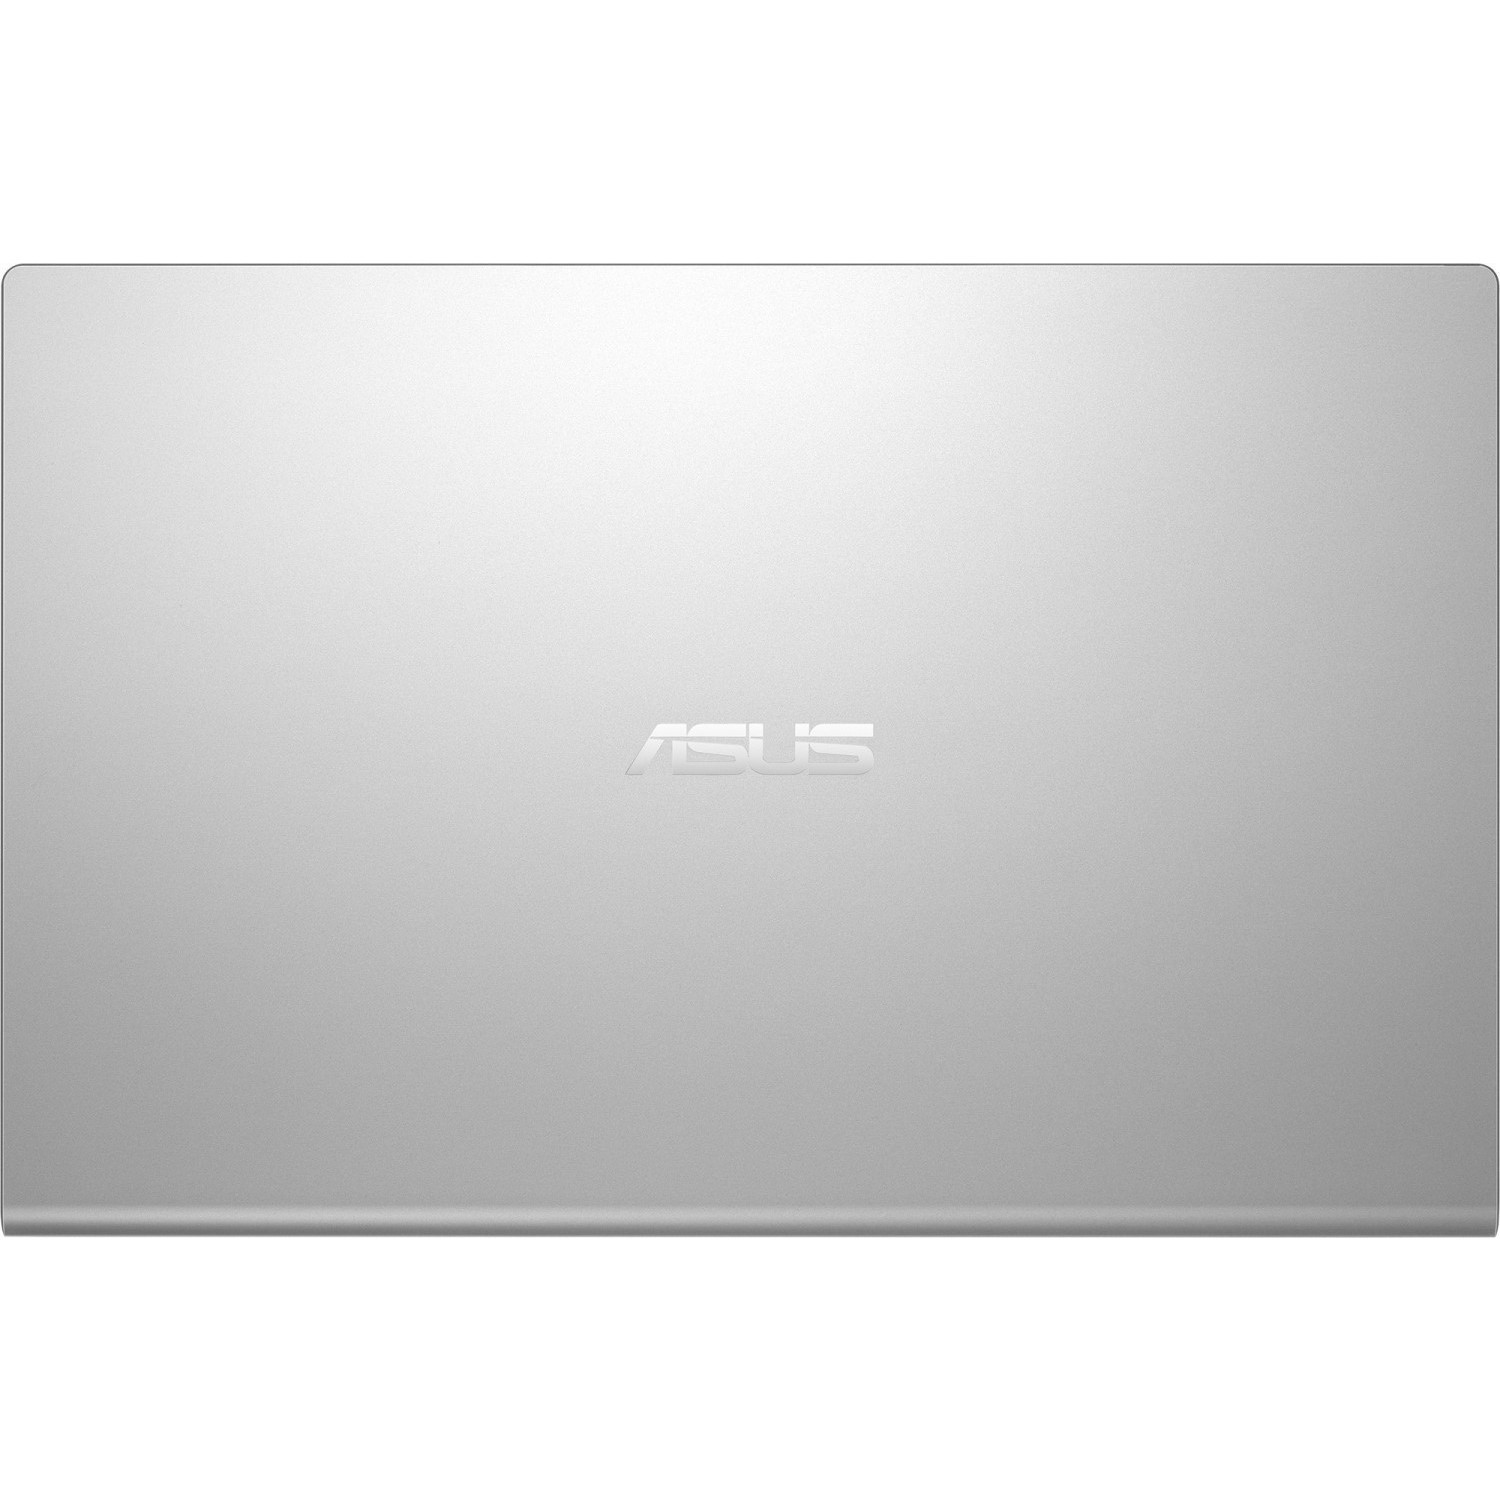 Ноутбук Asus A516ja Bq463t Купить